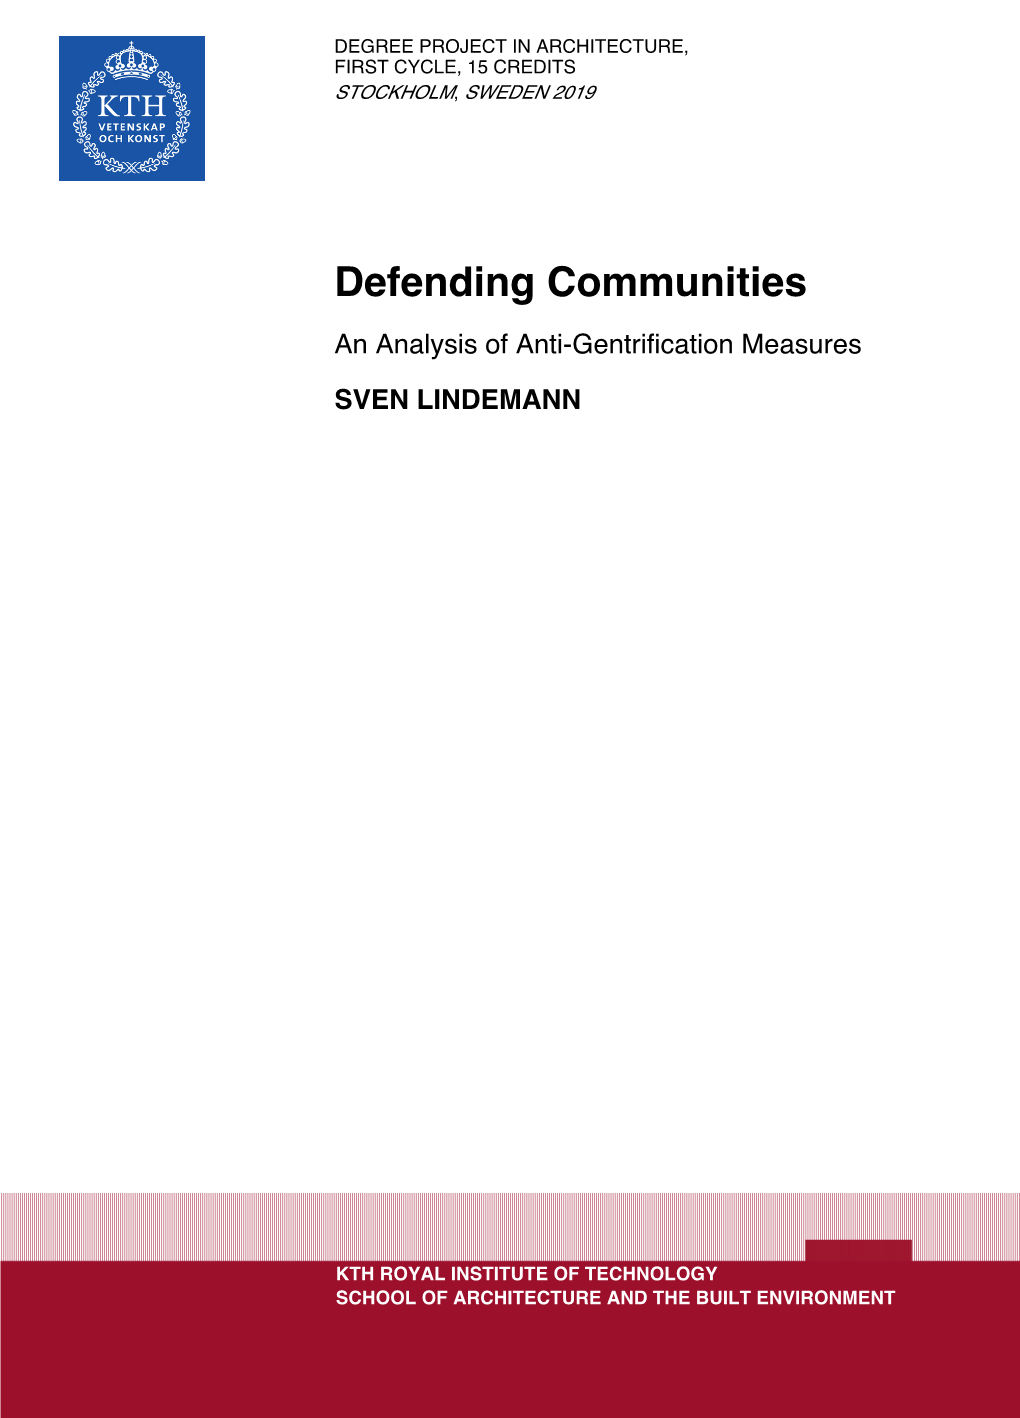 Defending Communities an Analysis of Anti-Gentrification Measures